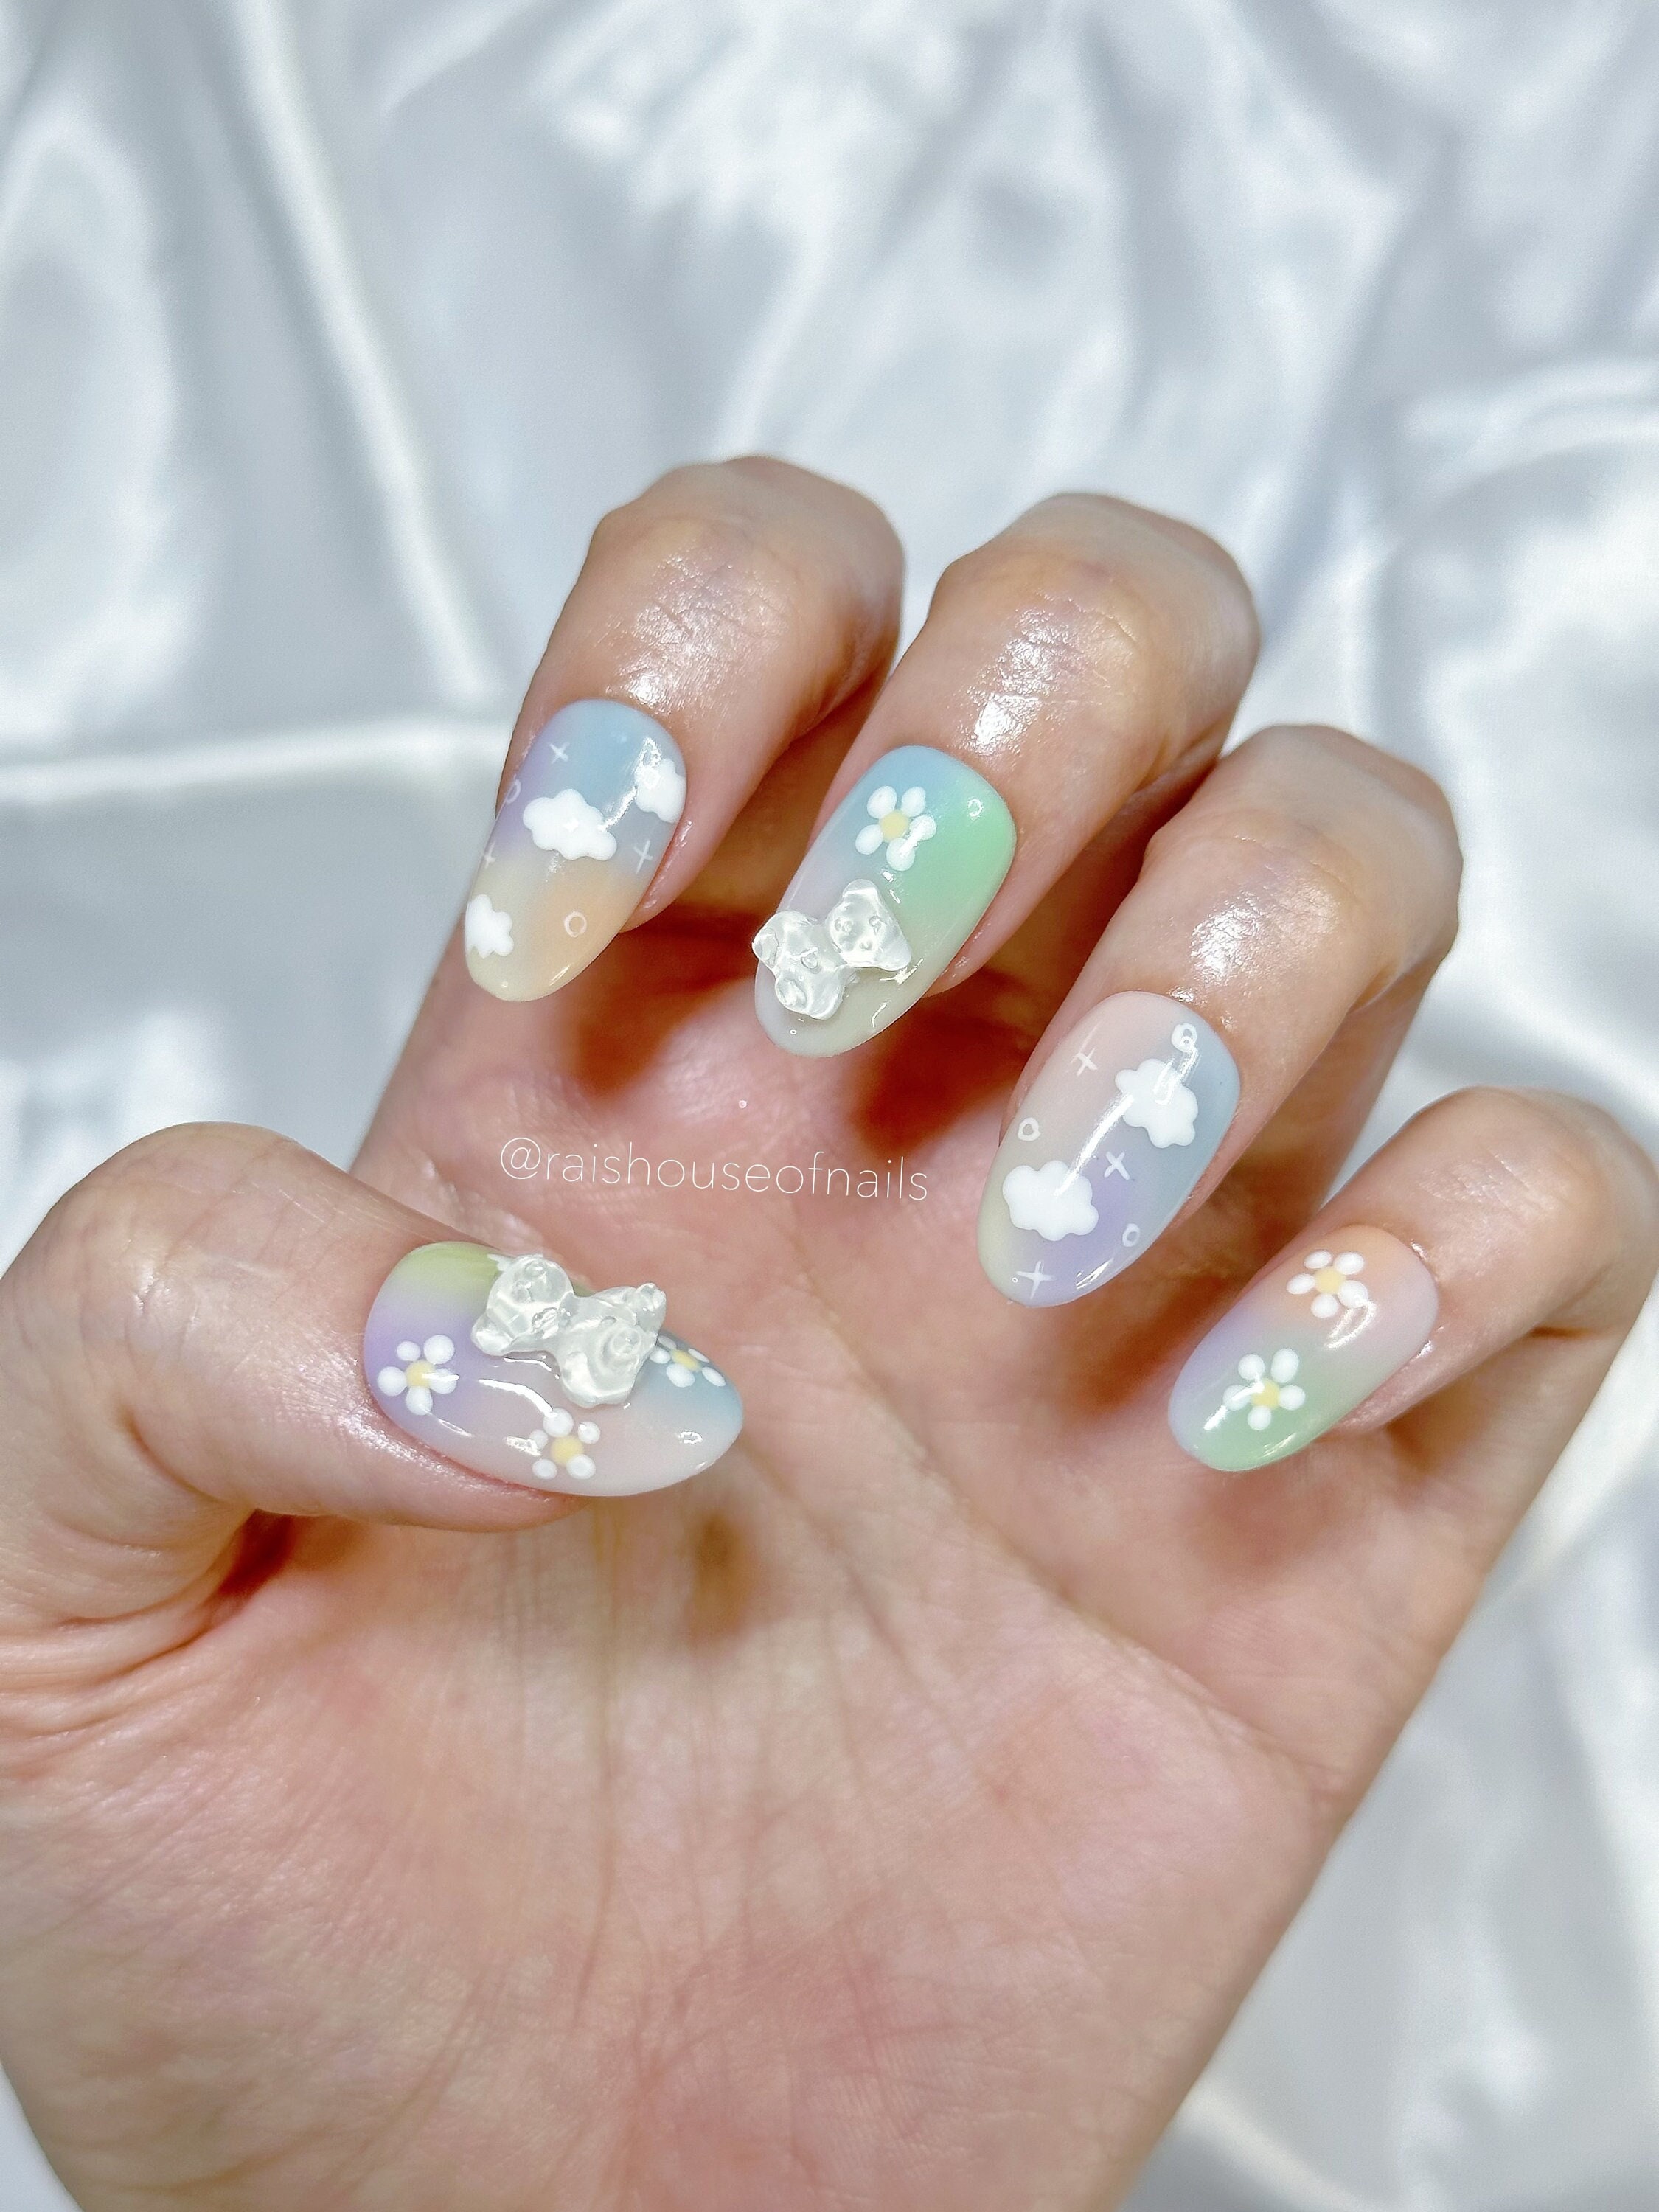 3D Pastel Teddy Bear Nail Charms – Shasia Beauty Nails